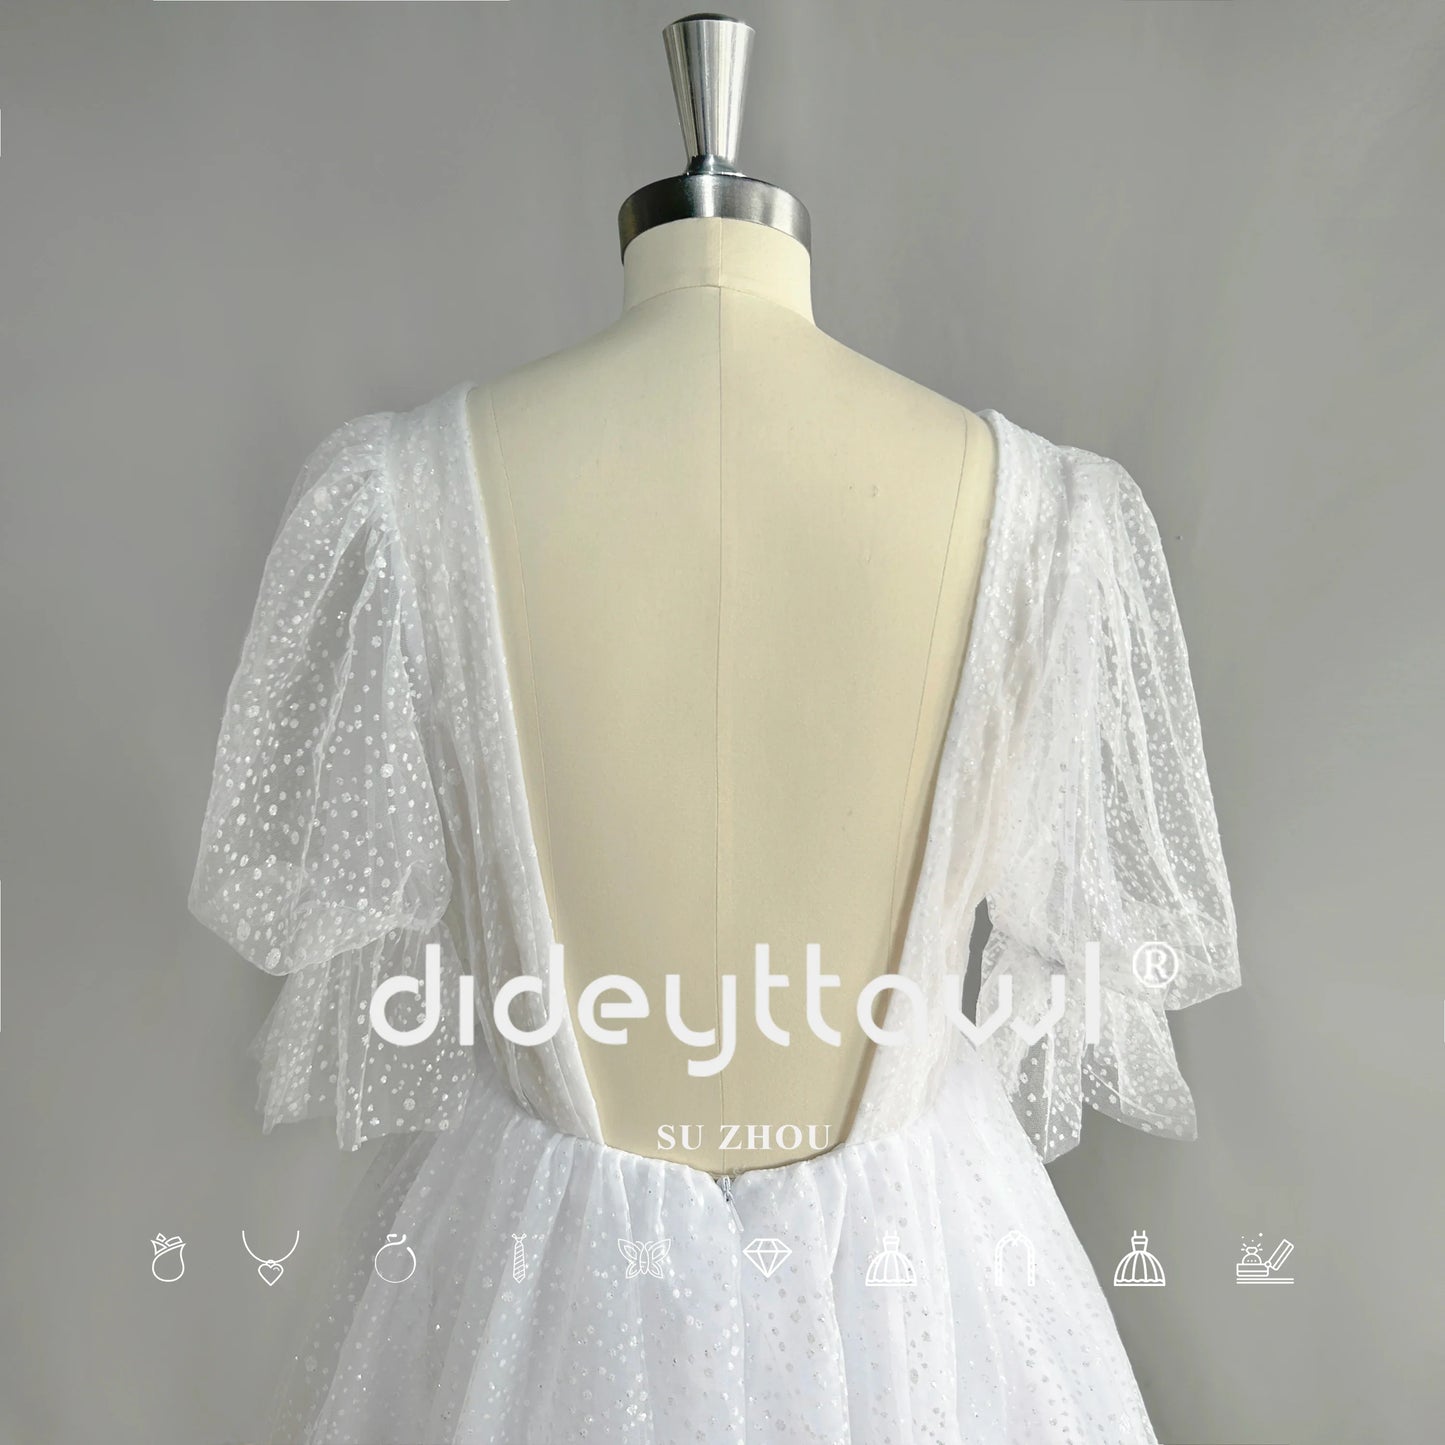 Mini robe de mariée courte en Tulle scintillant, manches bouffantes, col en V, dos nu, au-dessus du genou, robe de mariée brillante